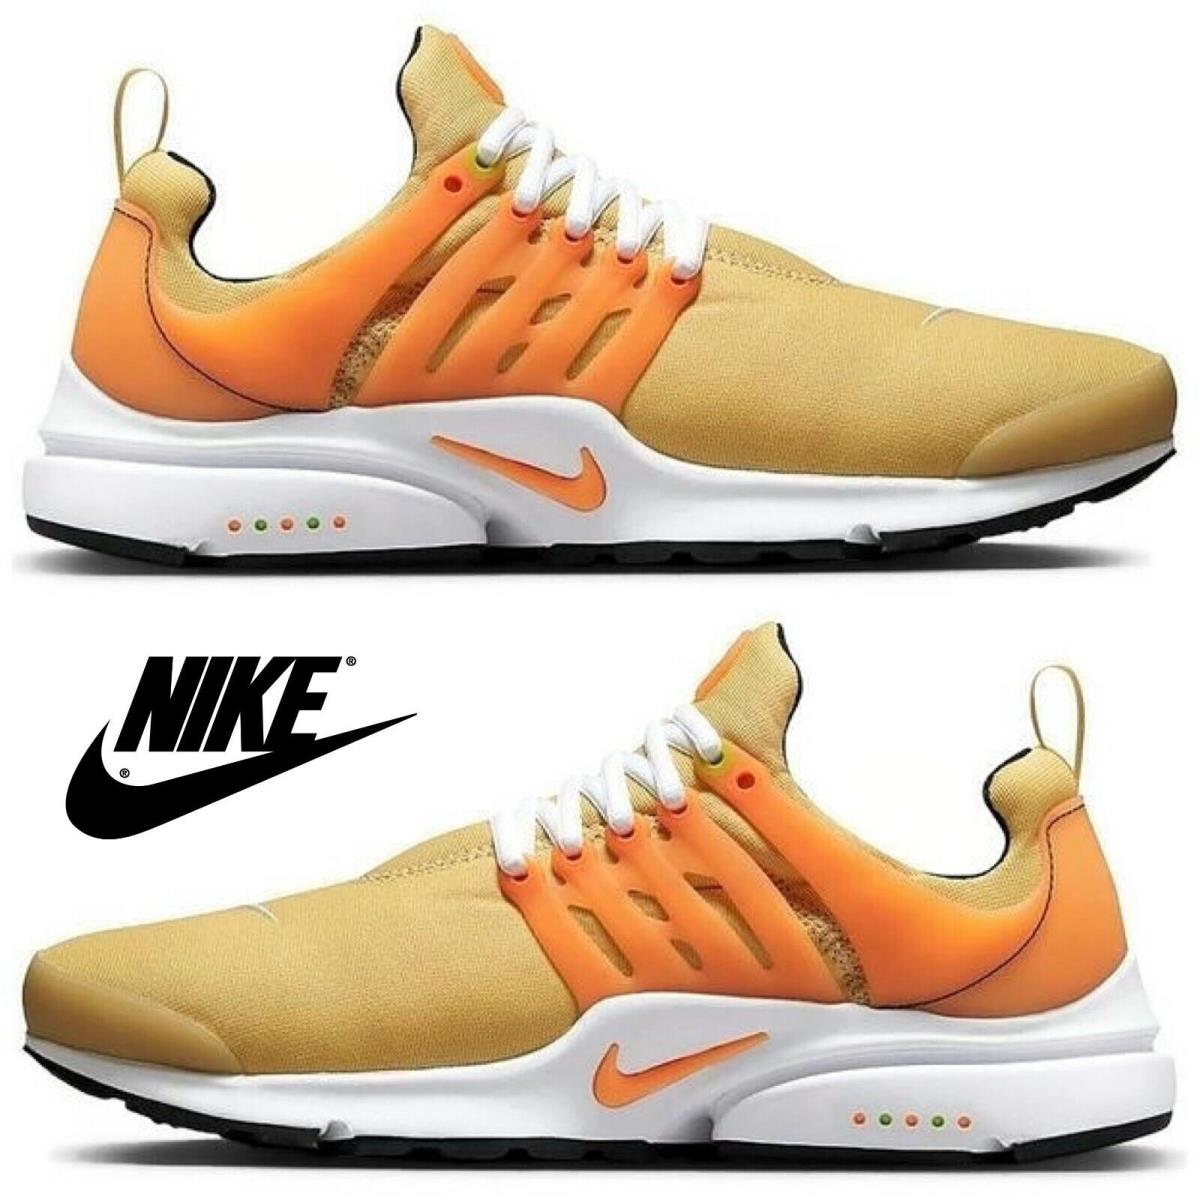 Nike Air Presto Running Sneakers Mens Athletic Comfort Casual Shoes Orange White - Orange, Manufacturer: Sesame/White/Black/Bright Mandarin